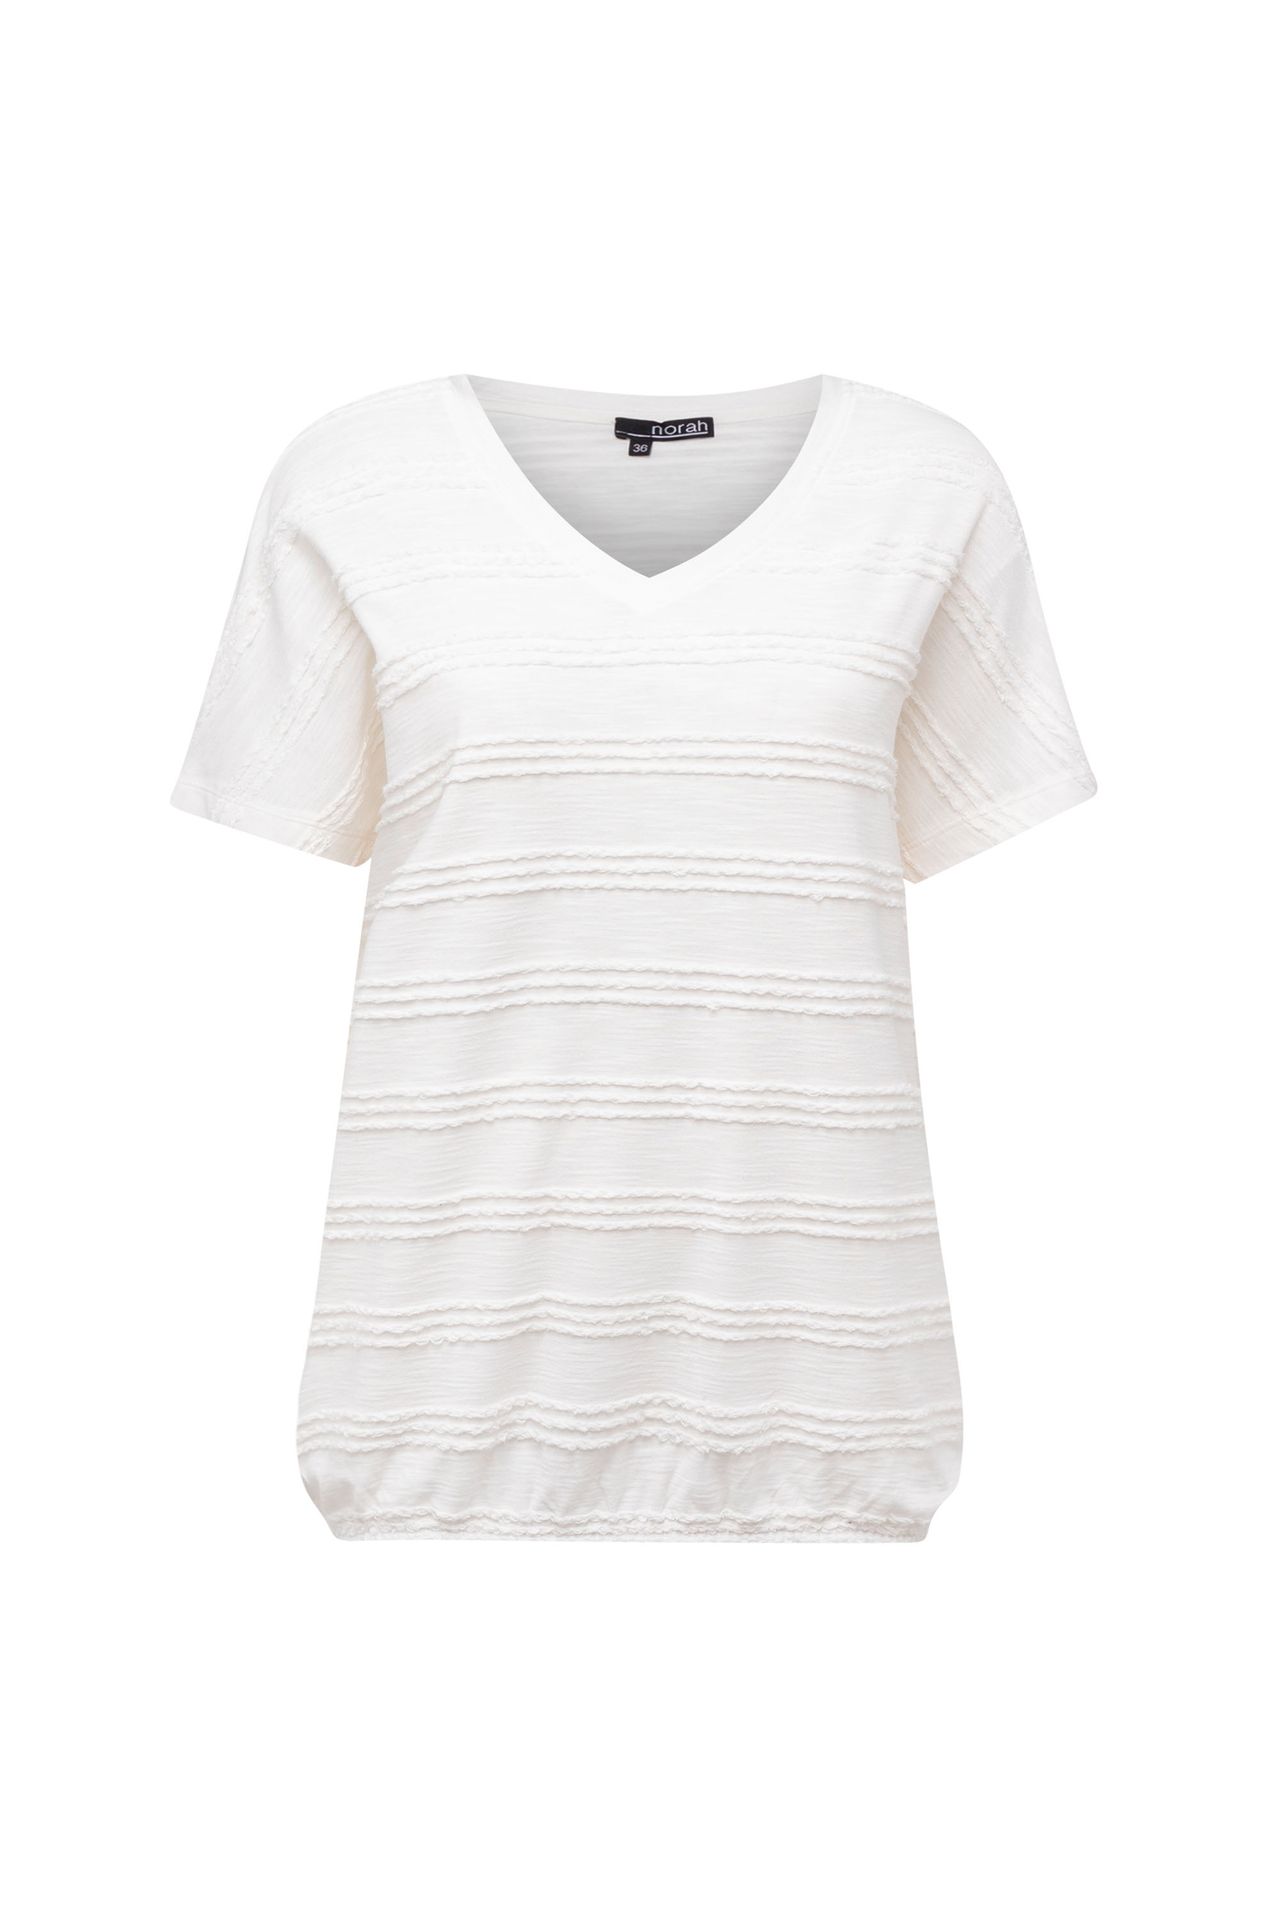 Norah Off white shirt off-white 213618-101